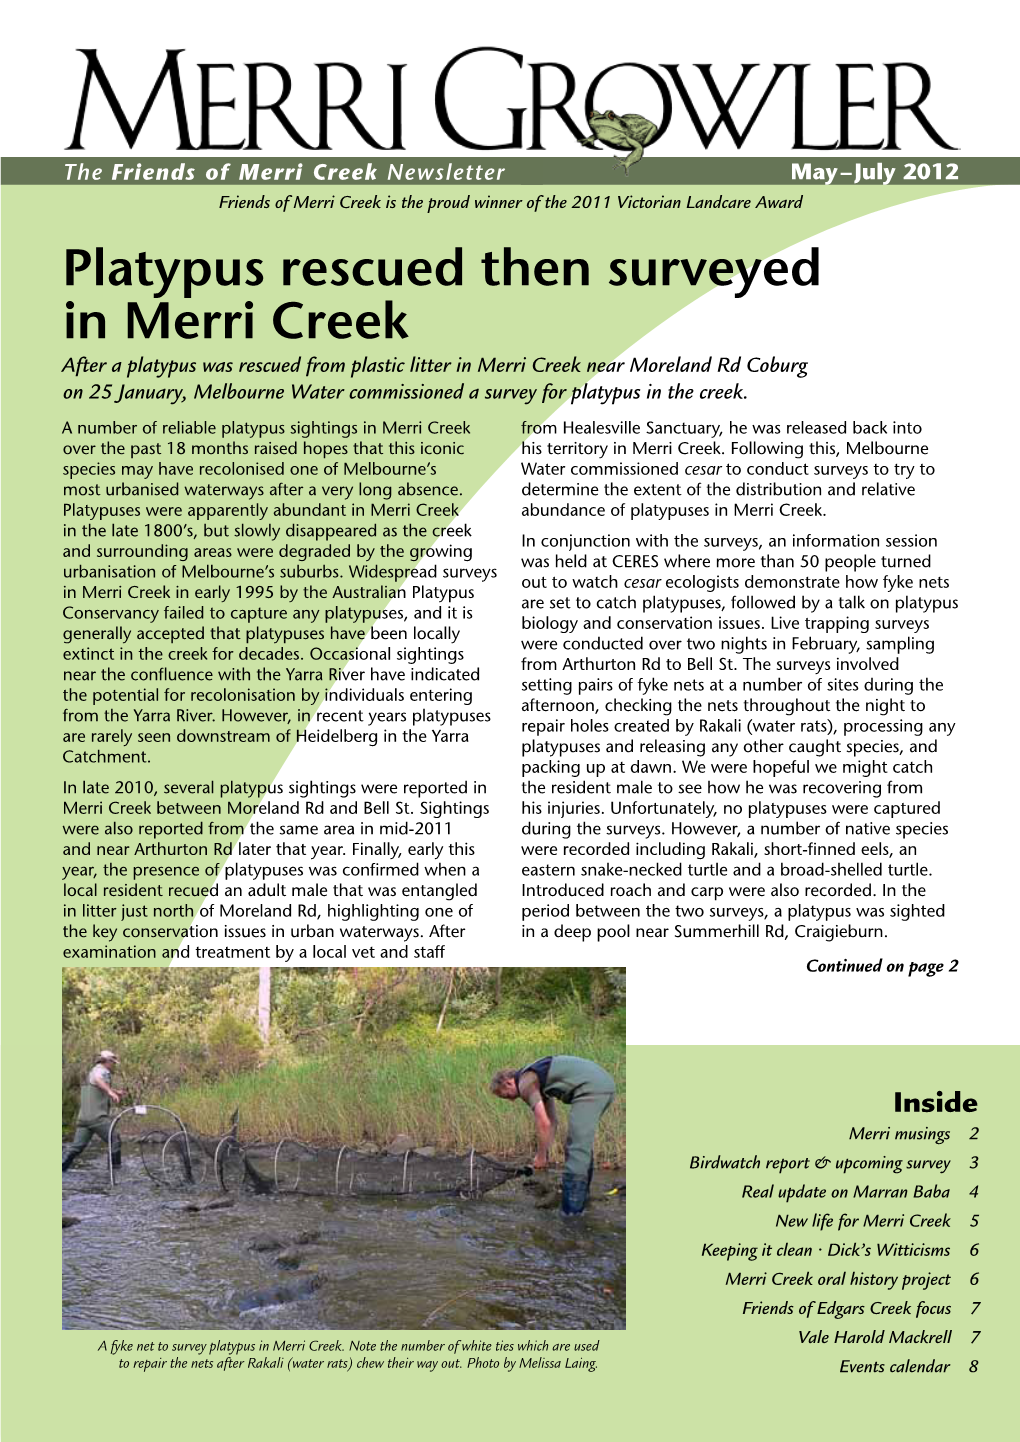 Platypus Rescued Then Surveyed in Merri Creek